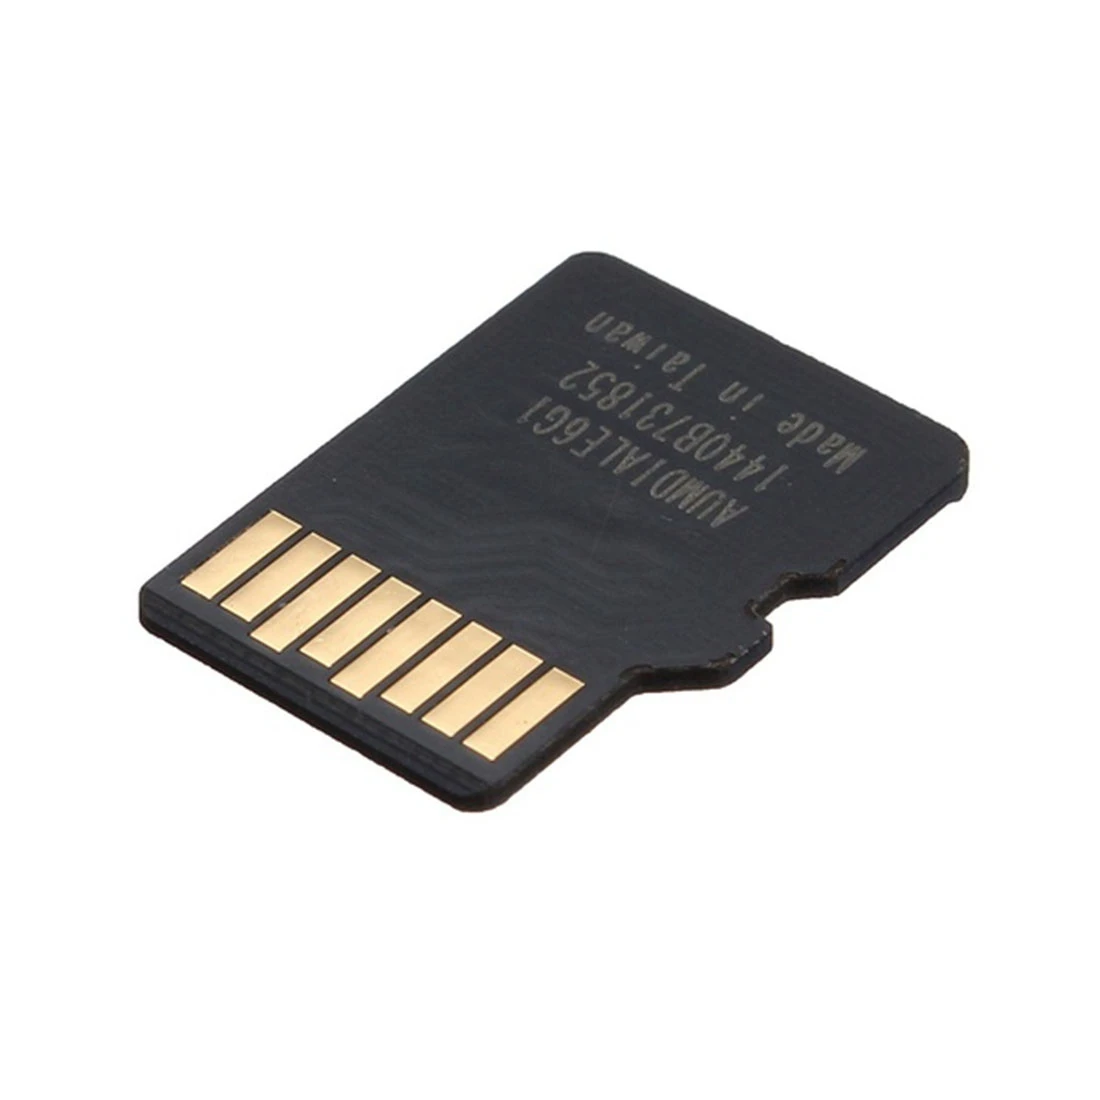 Micro SD карт памяти для Samsung Galaxy S5 S4 S3 Note 4 3 2 htc Sony, Nokia телефона